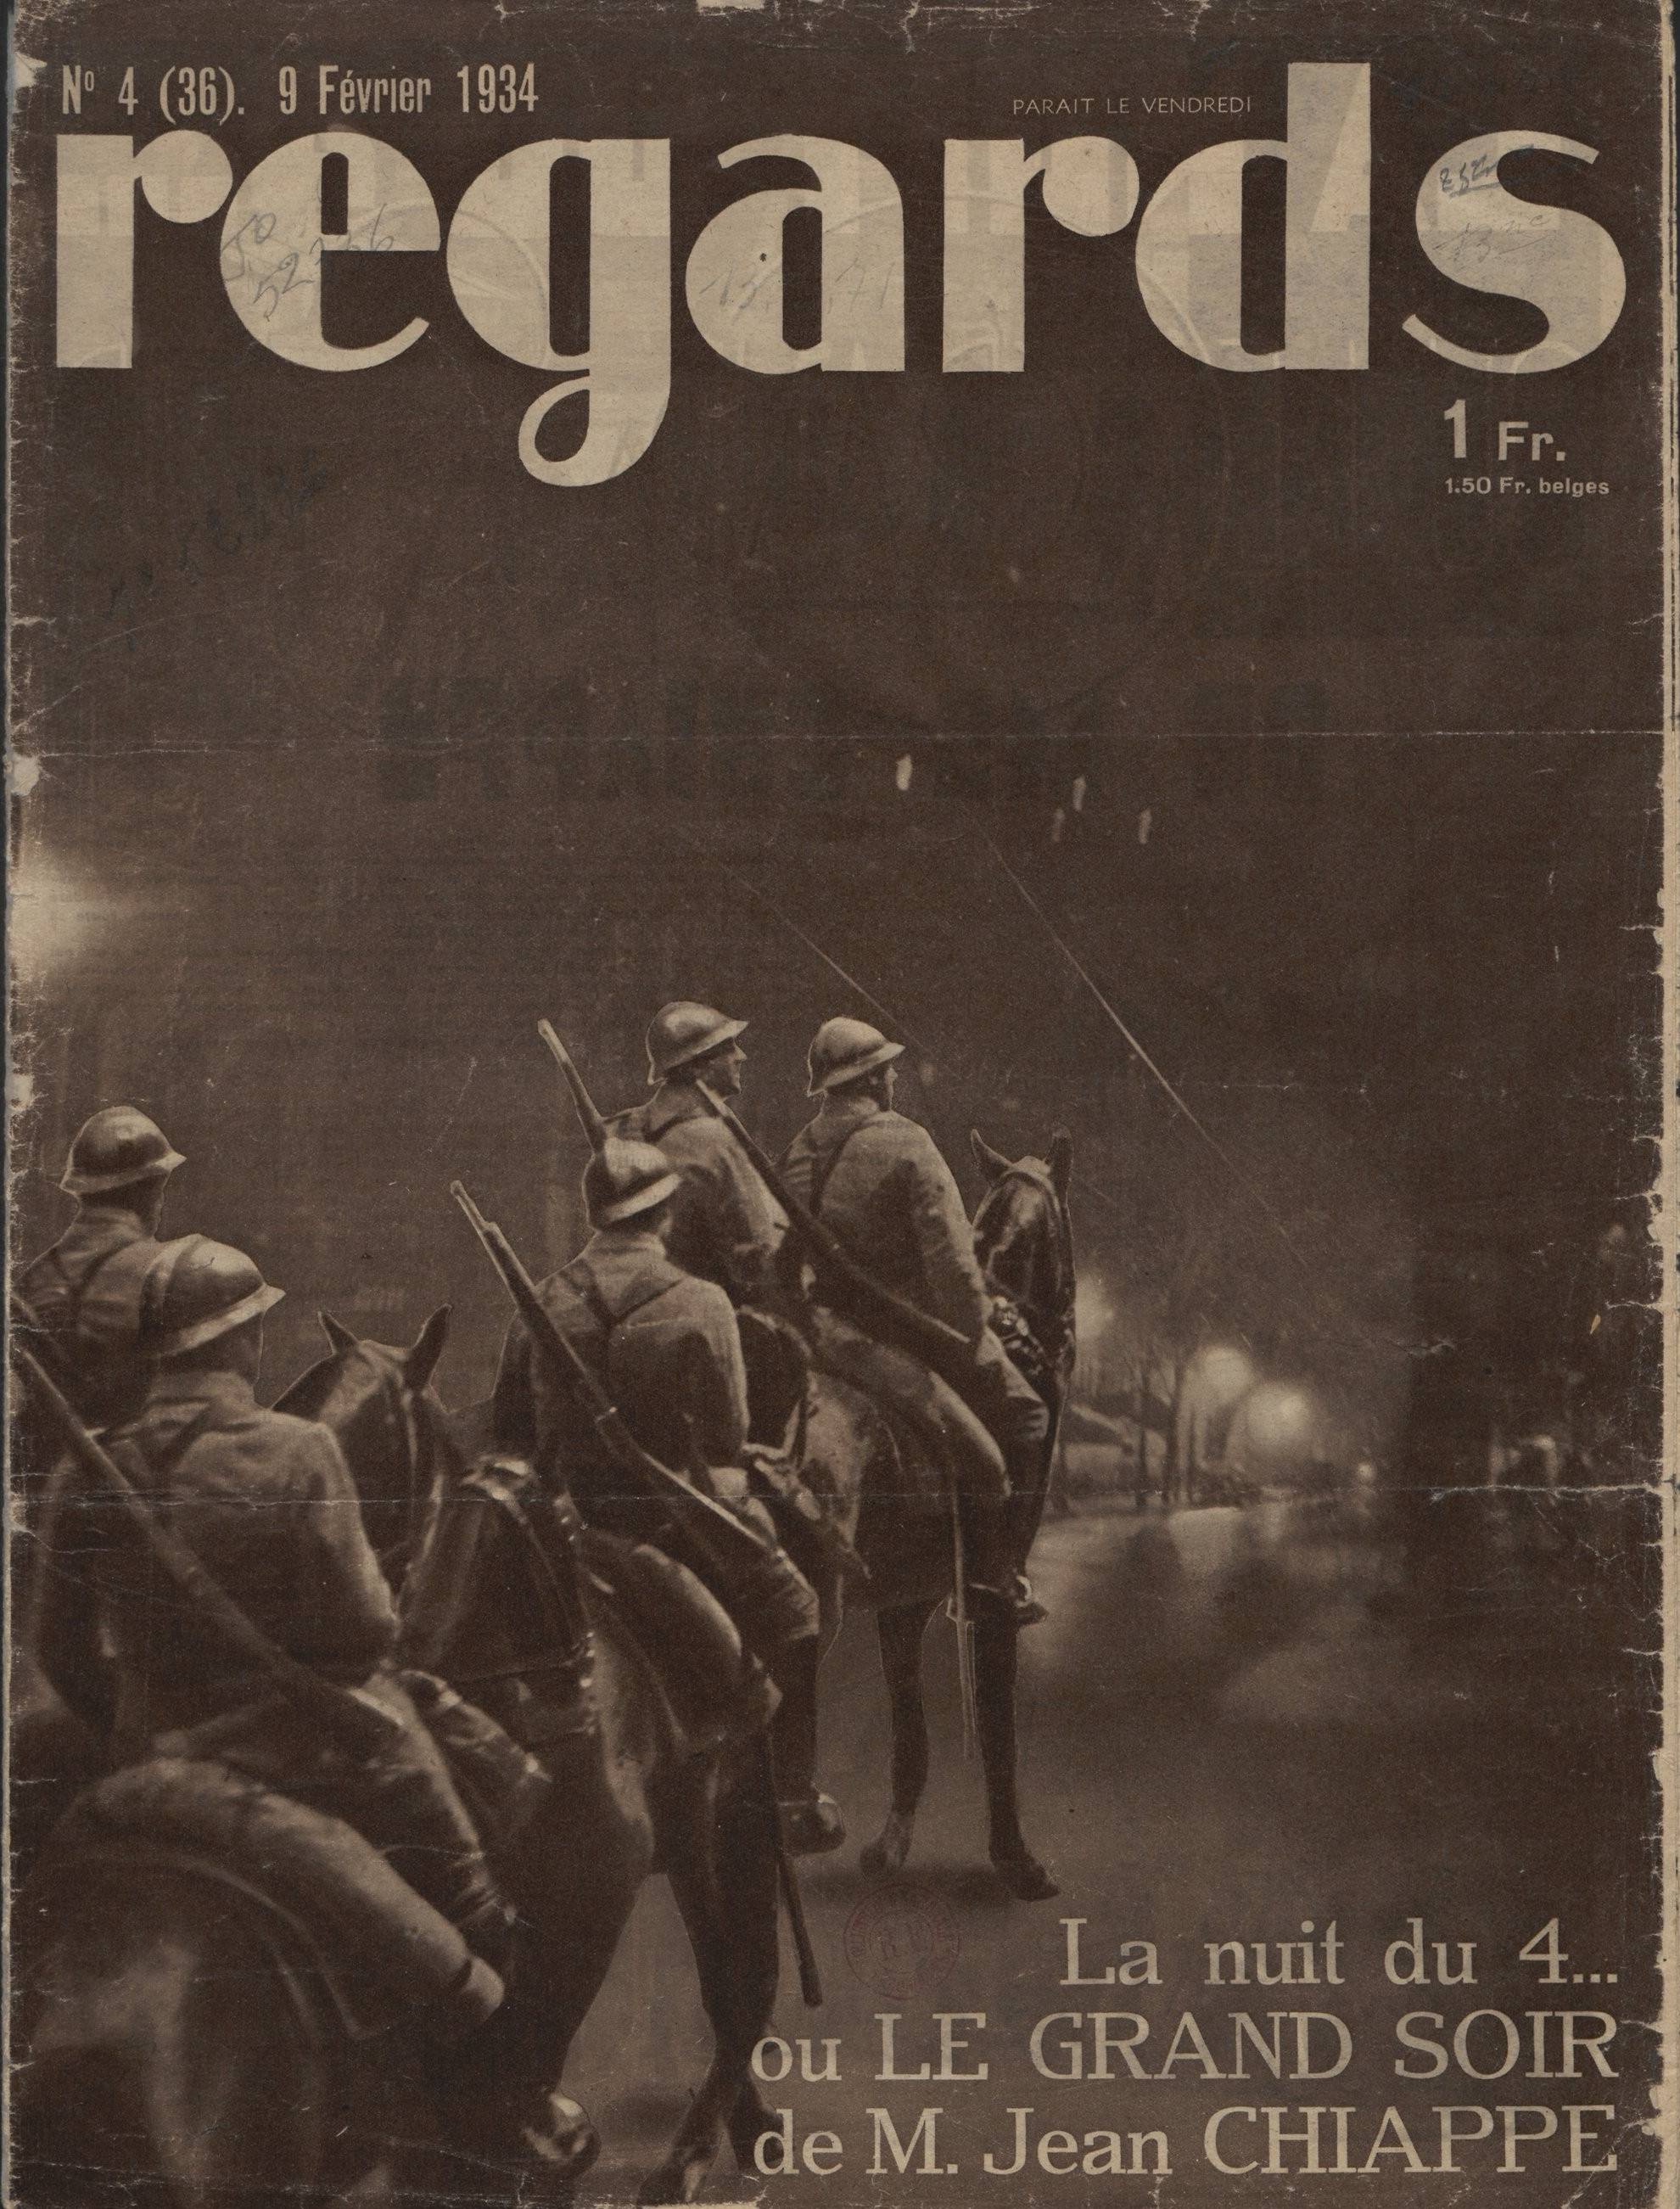 Regards, Paris, 9 février 1934 - source : Gallica-BnF